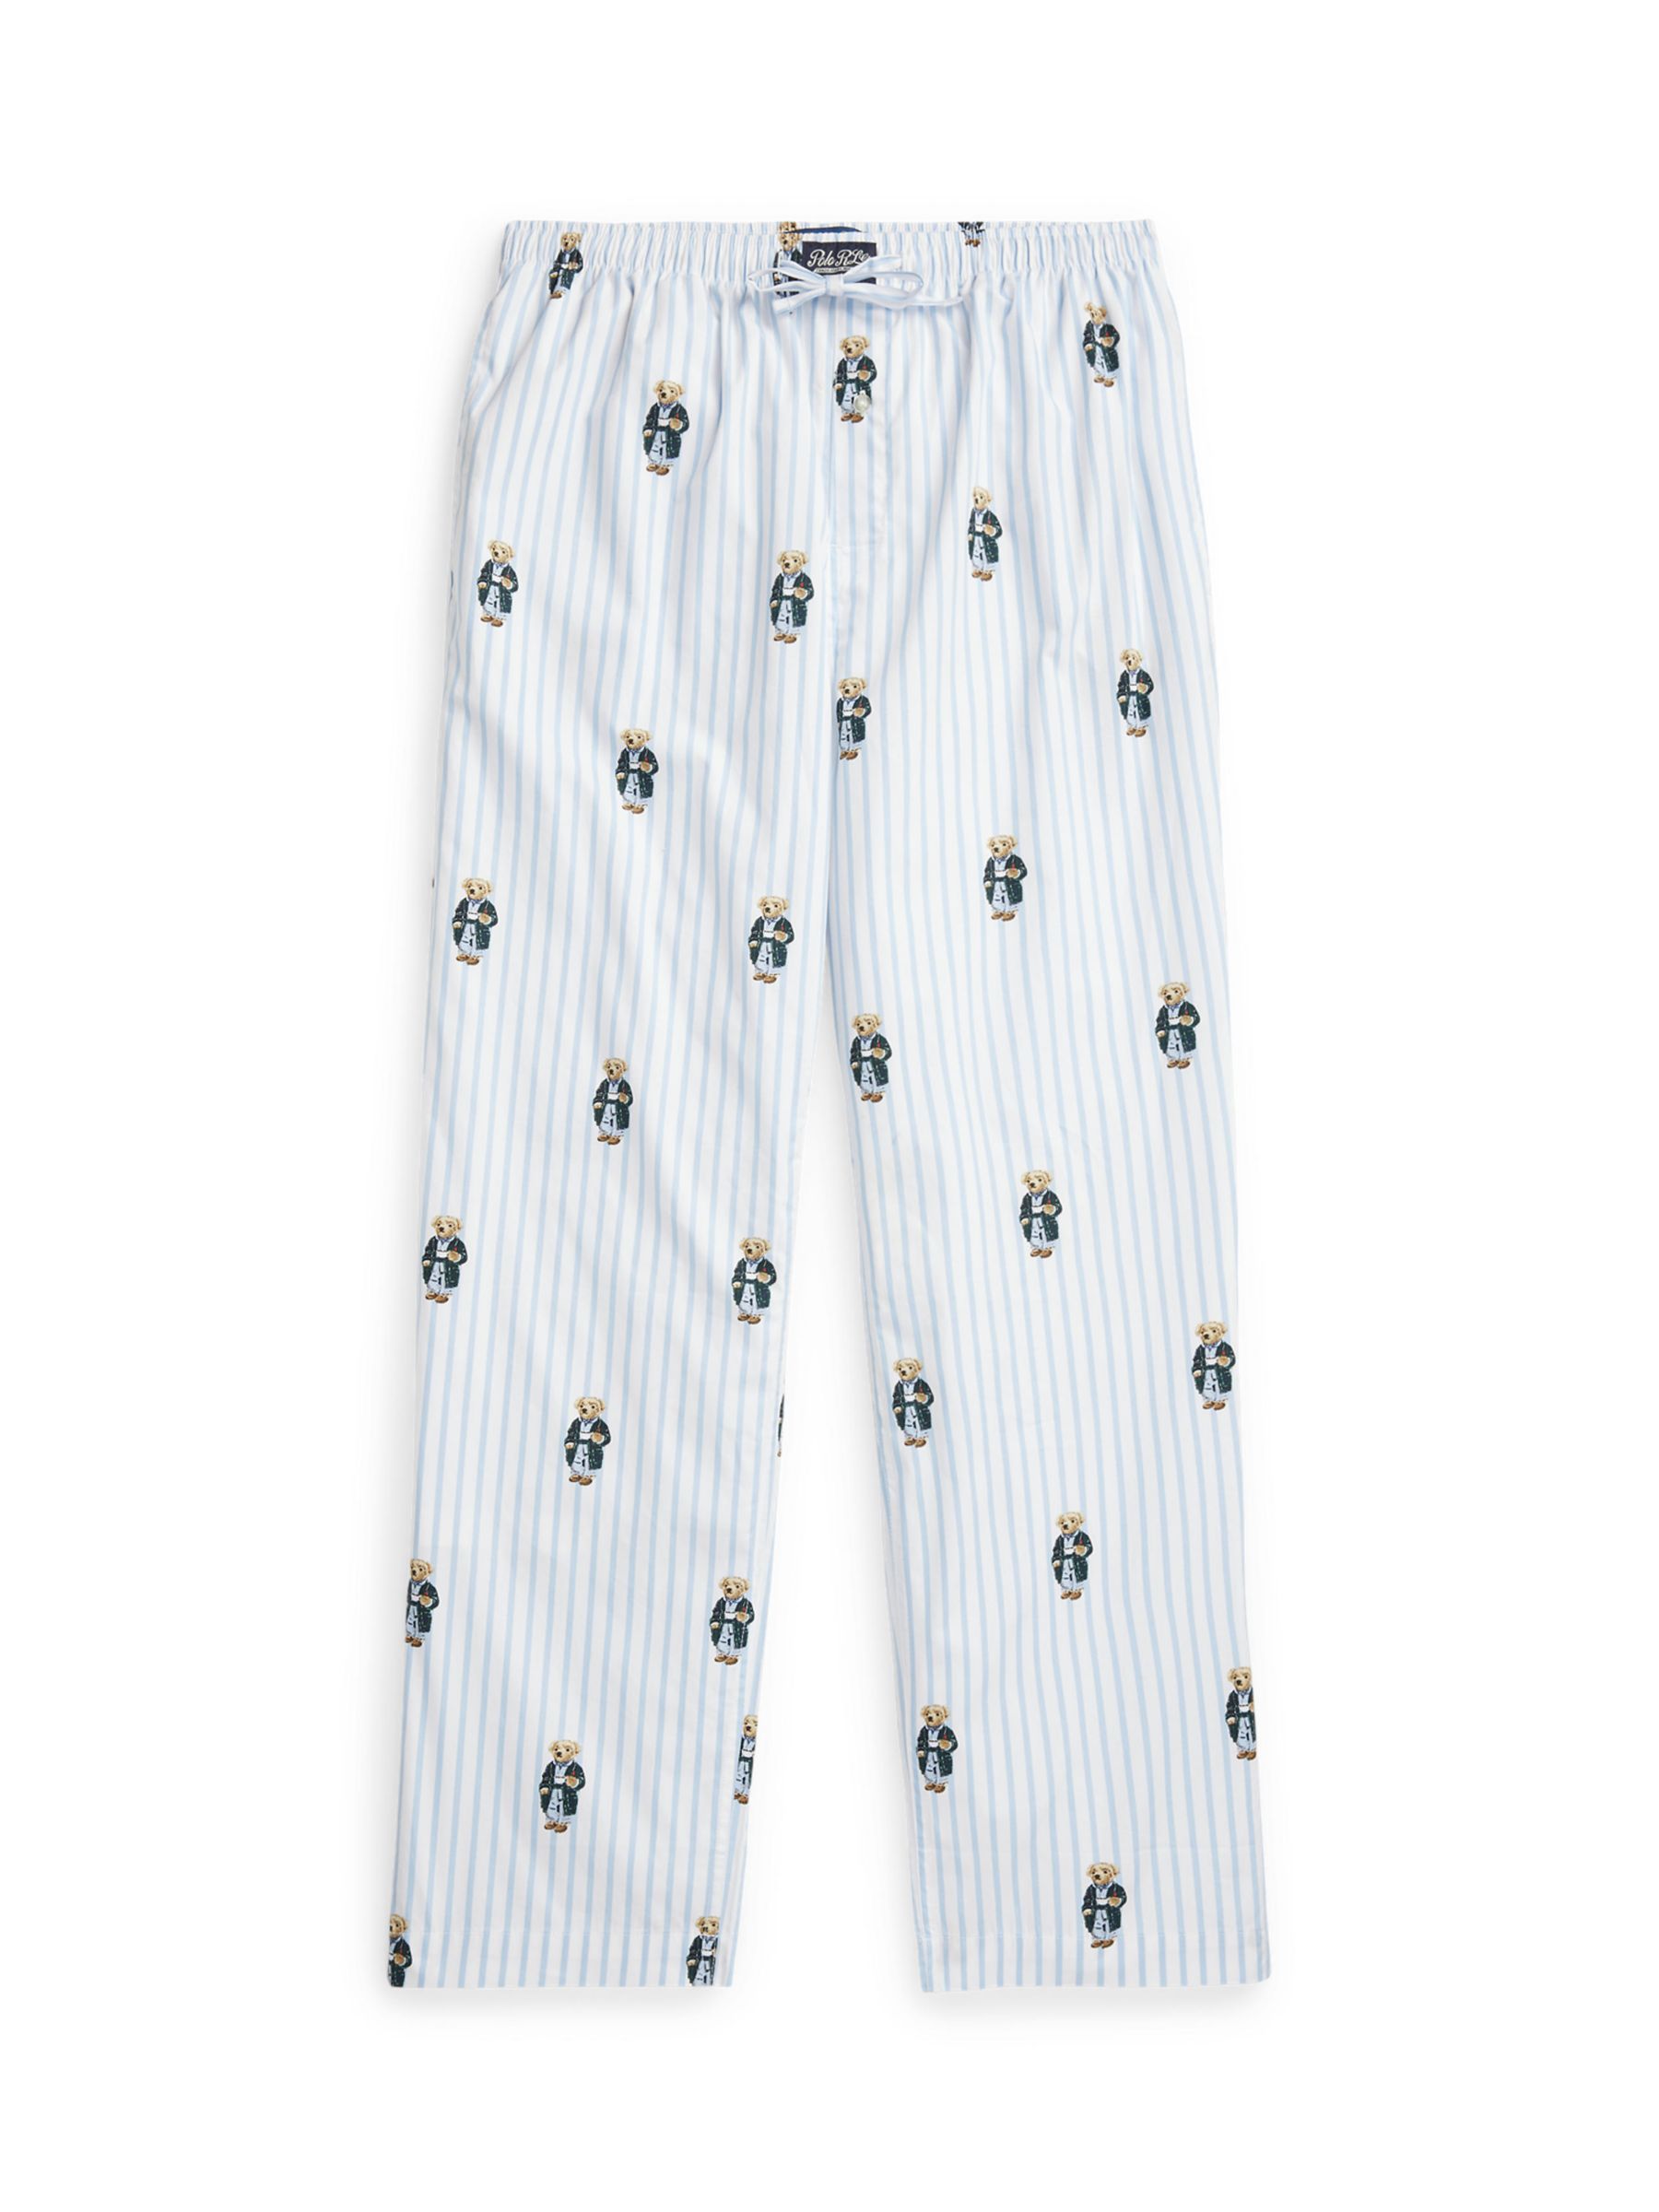 Ralph Lauren Polo Bear Striped Cotton Lounge Pants, Blue/Multi, S